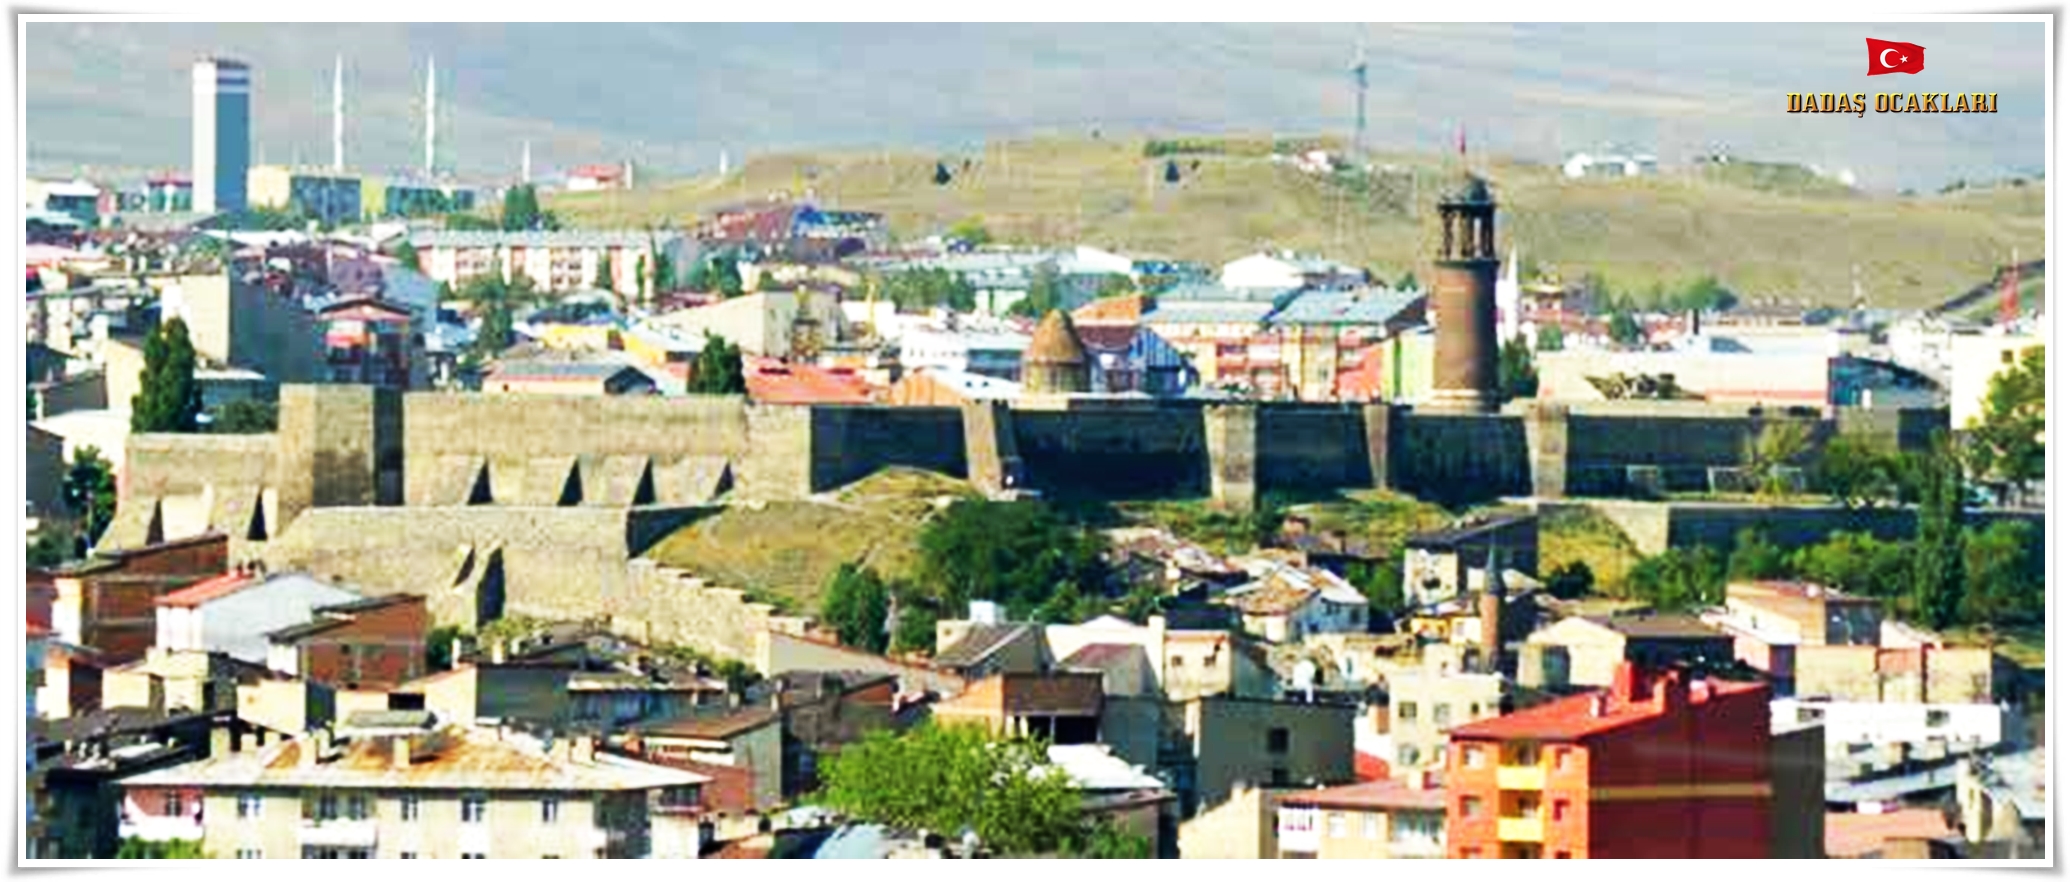 Erzurum Belgeseli